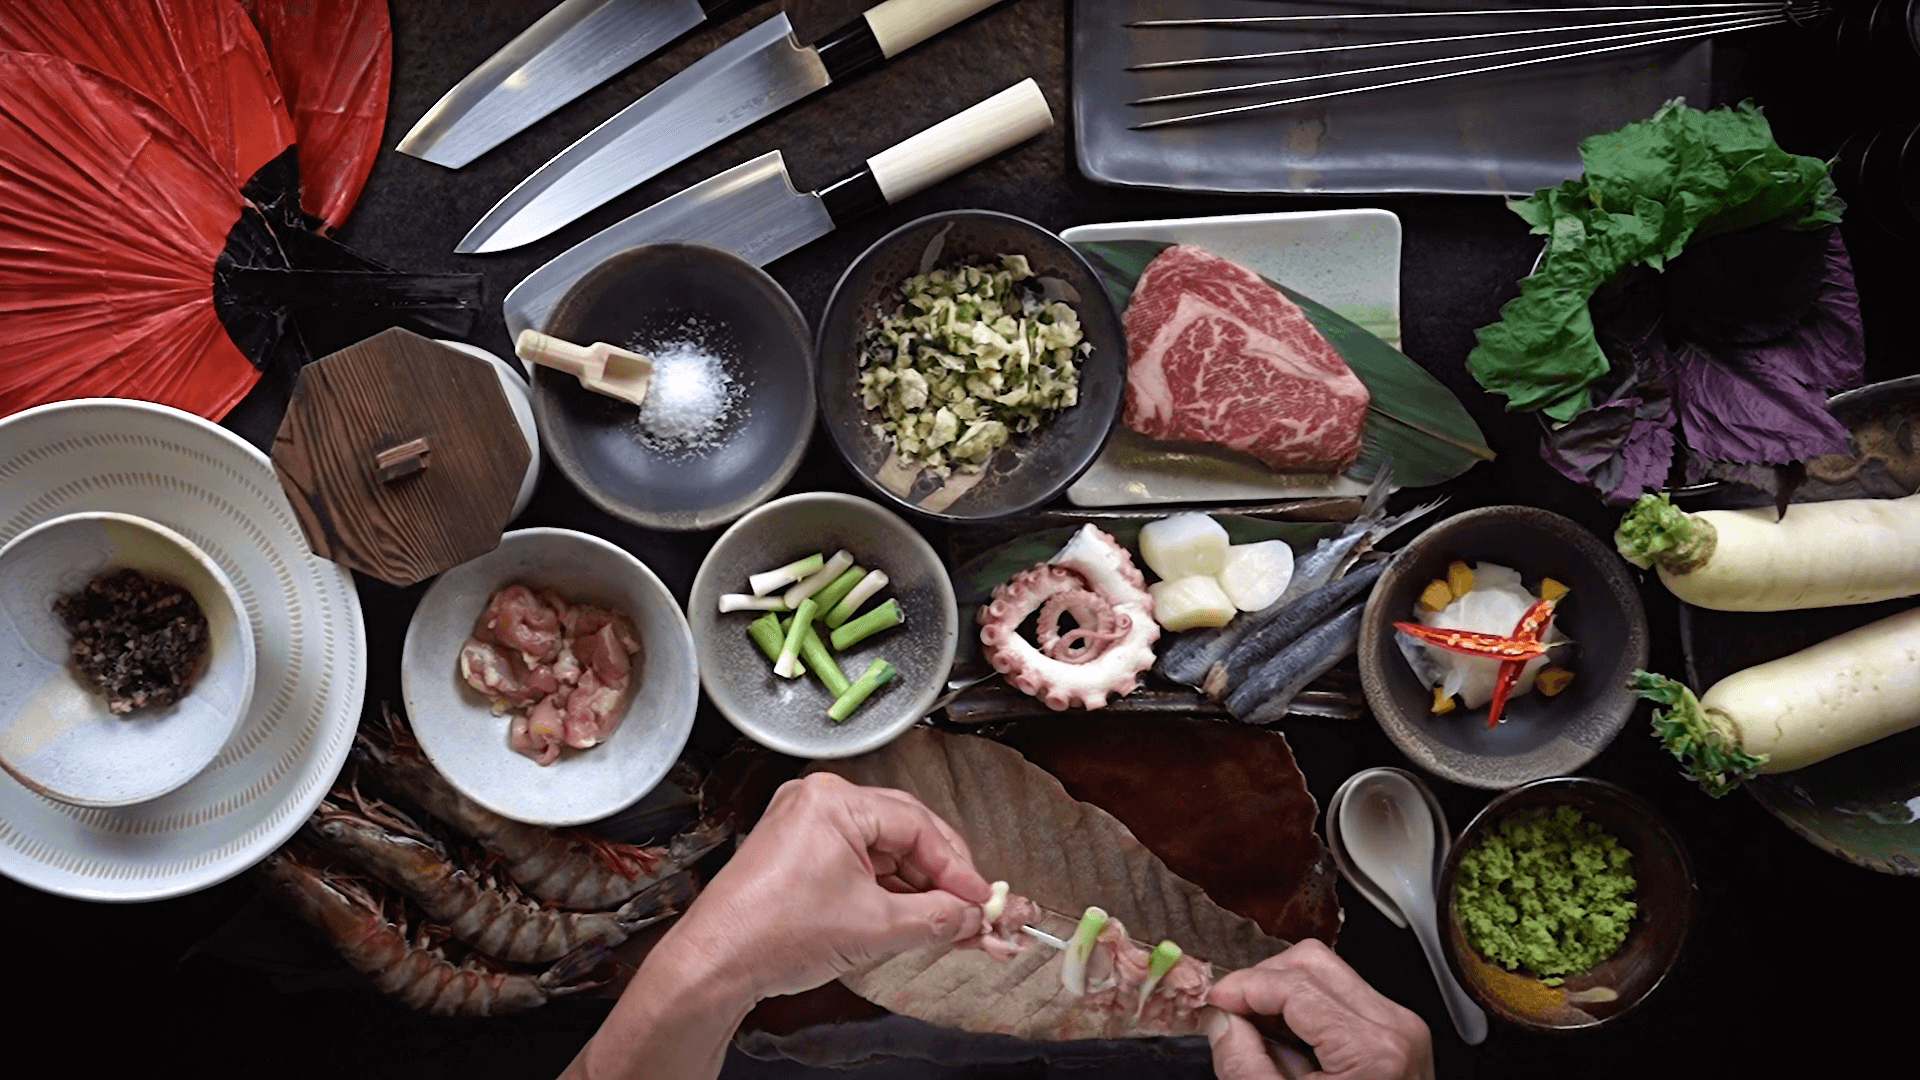 South African restaurants highlighting underrepresented cuisines – KoL Izakhaya Japanese robata